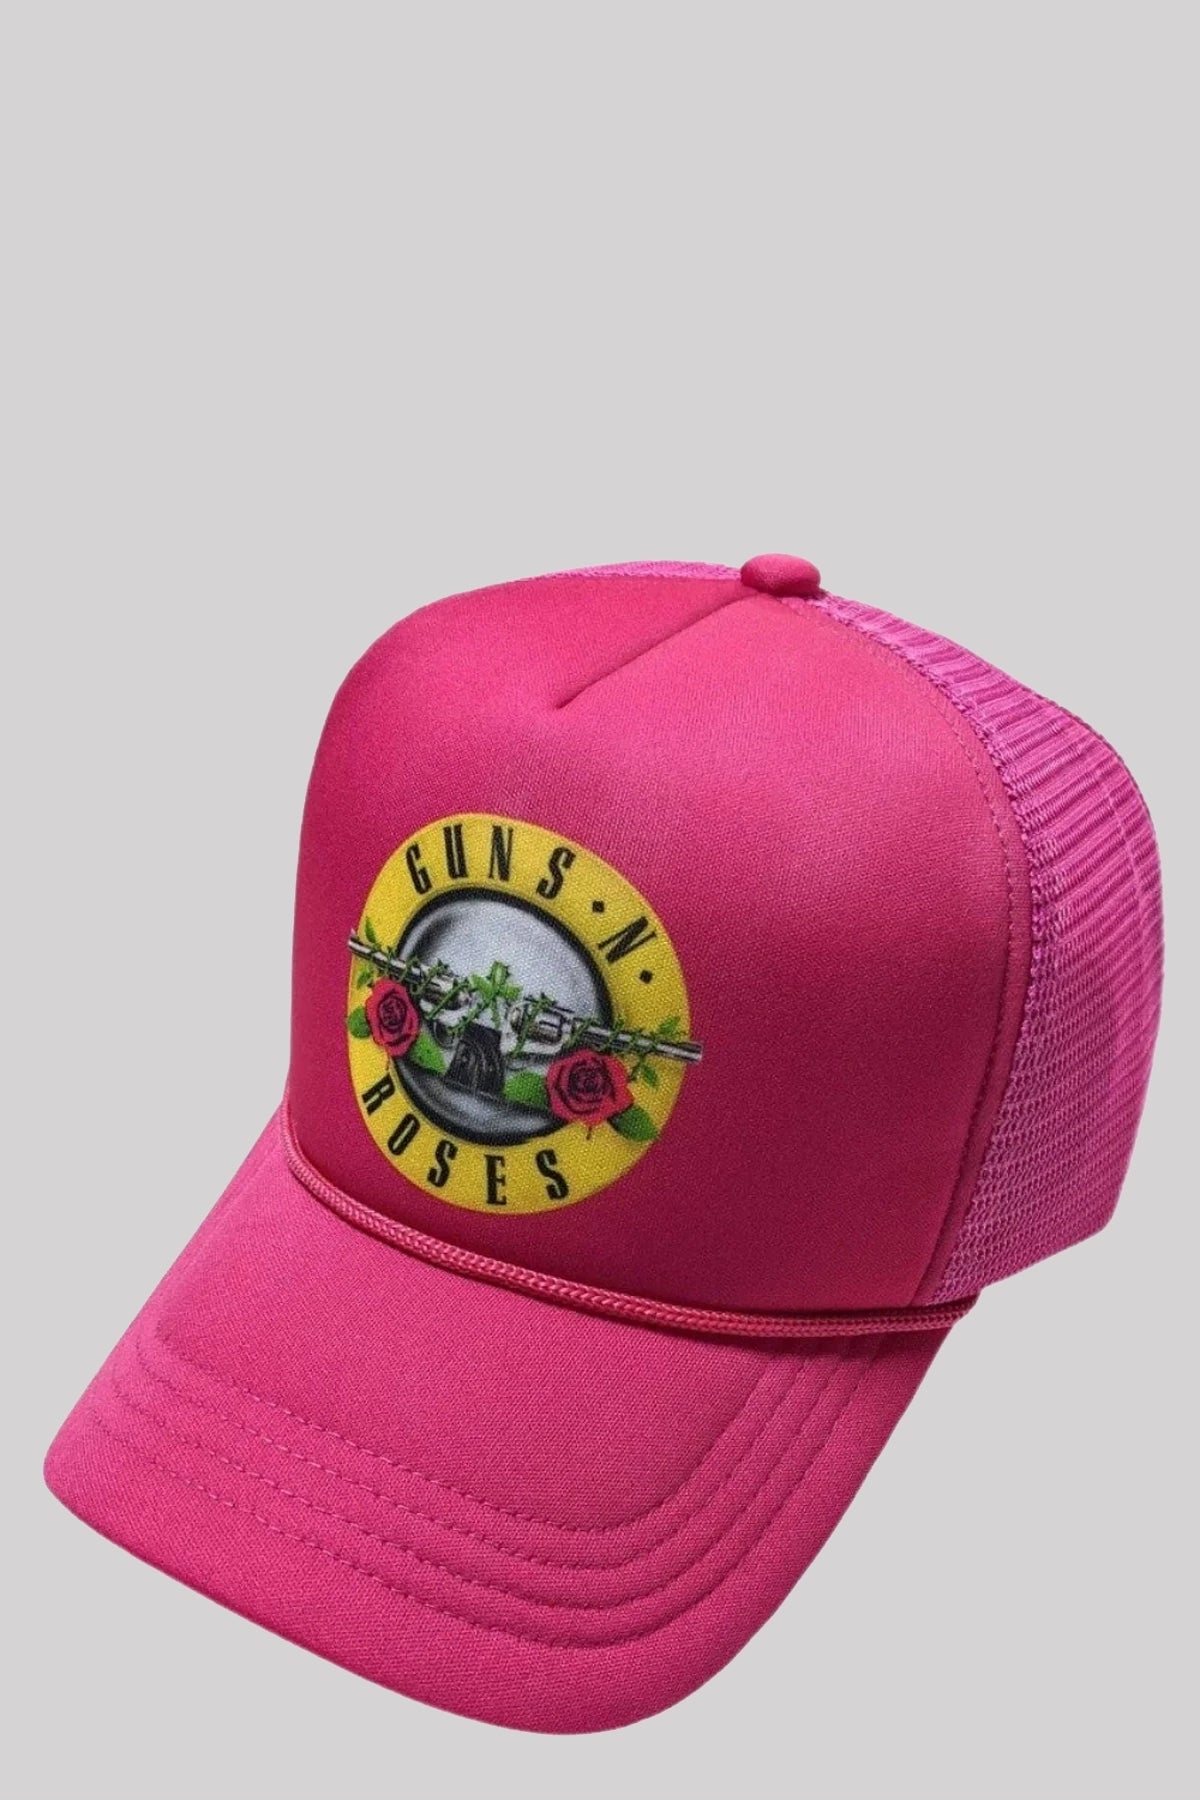 Guns N' Roses Unisex Mesh Back Cap: Classic Logo